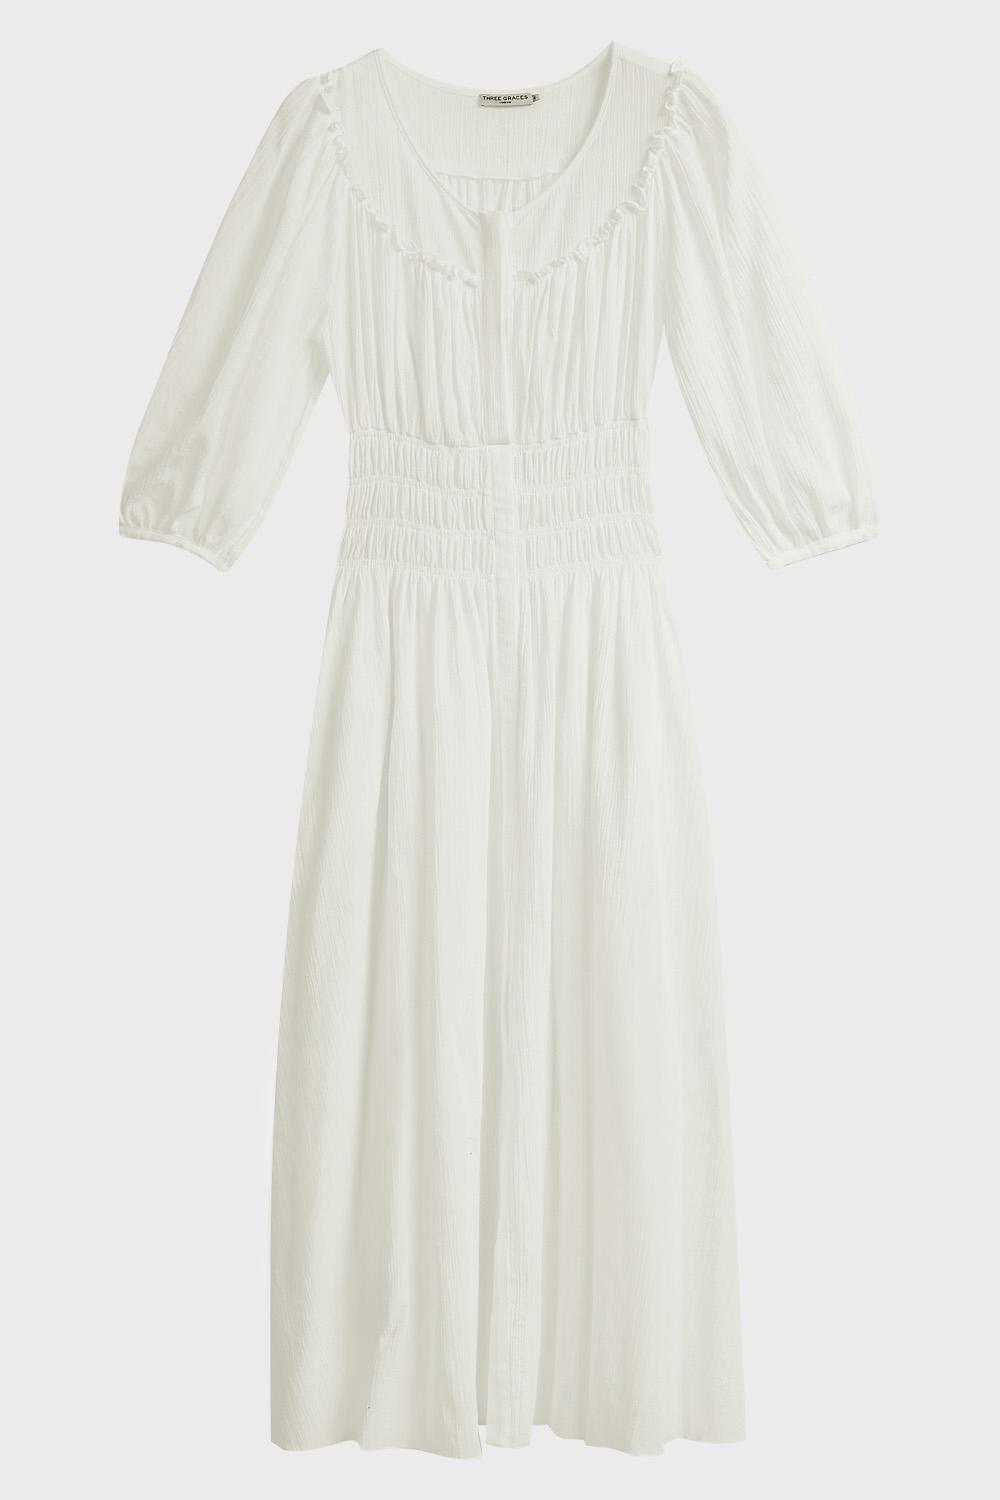 Lyst - Three Graces London Arabella Smocked Cotton Dress in White